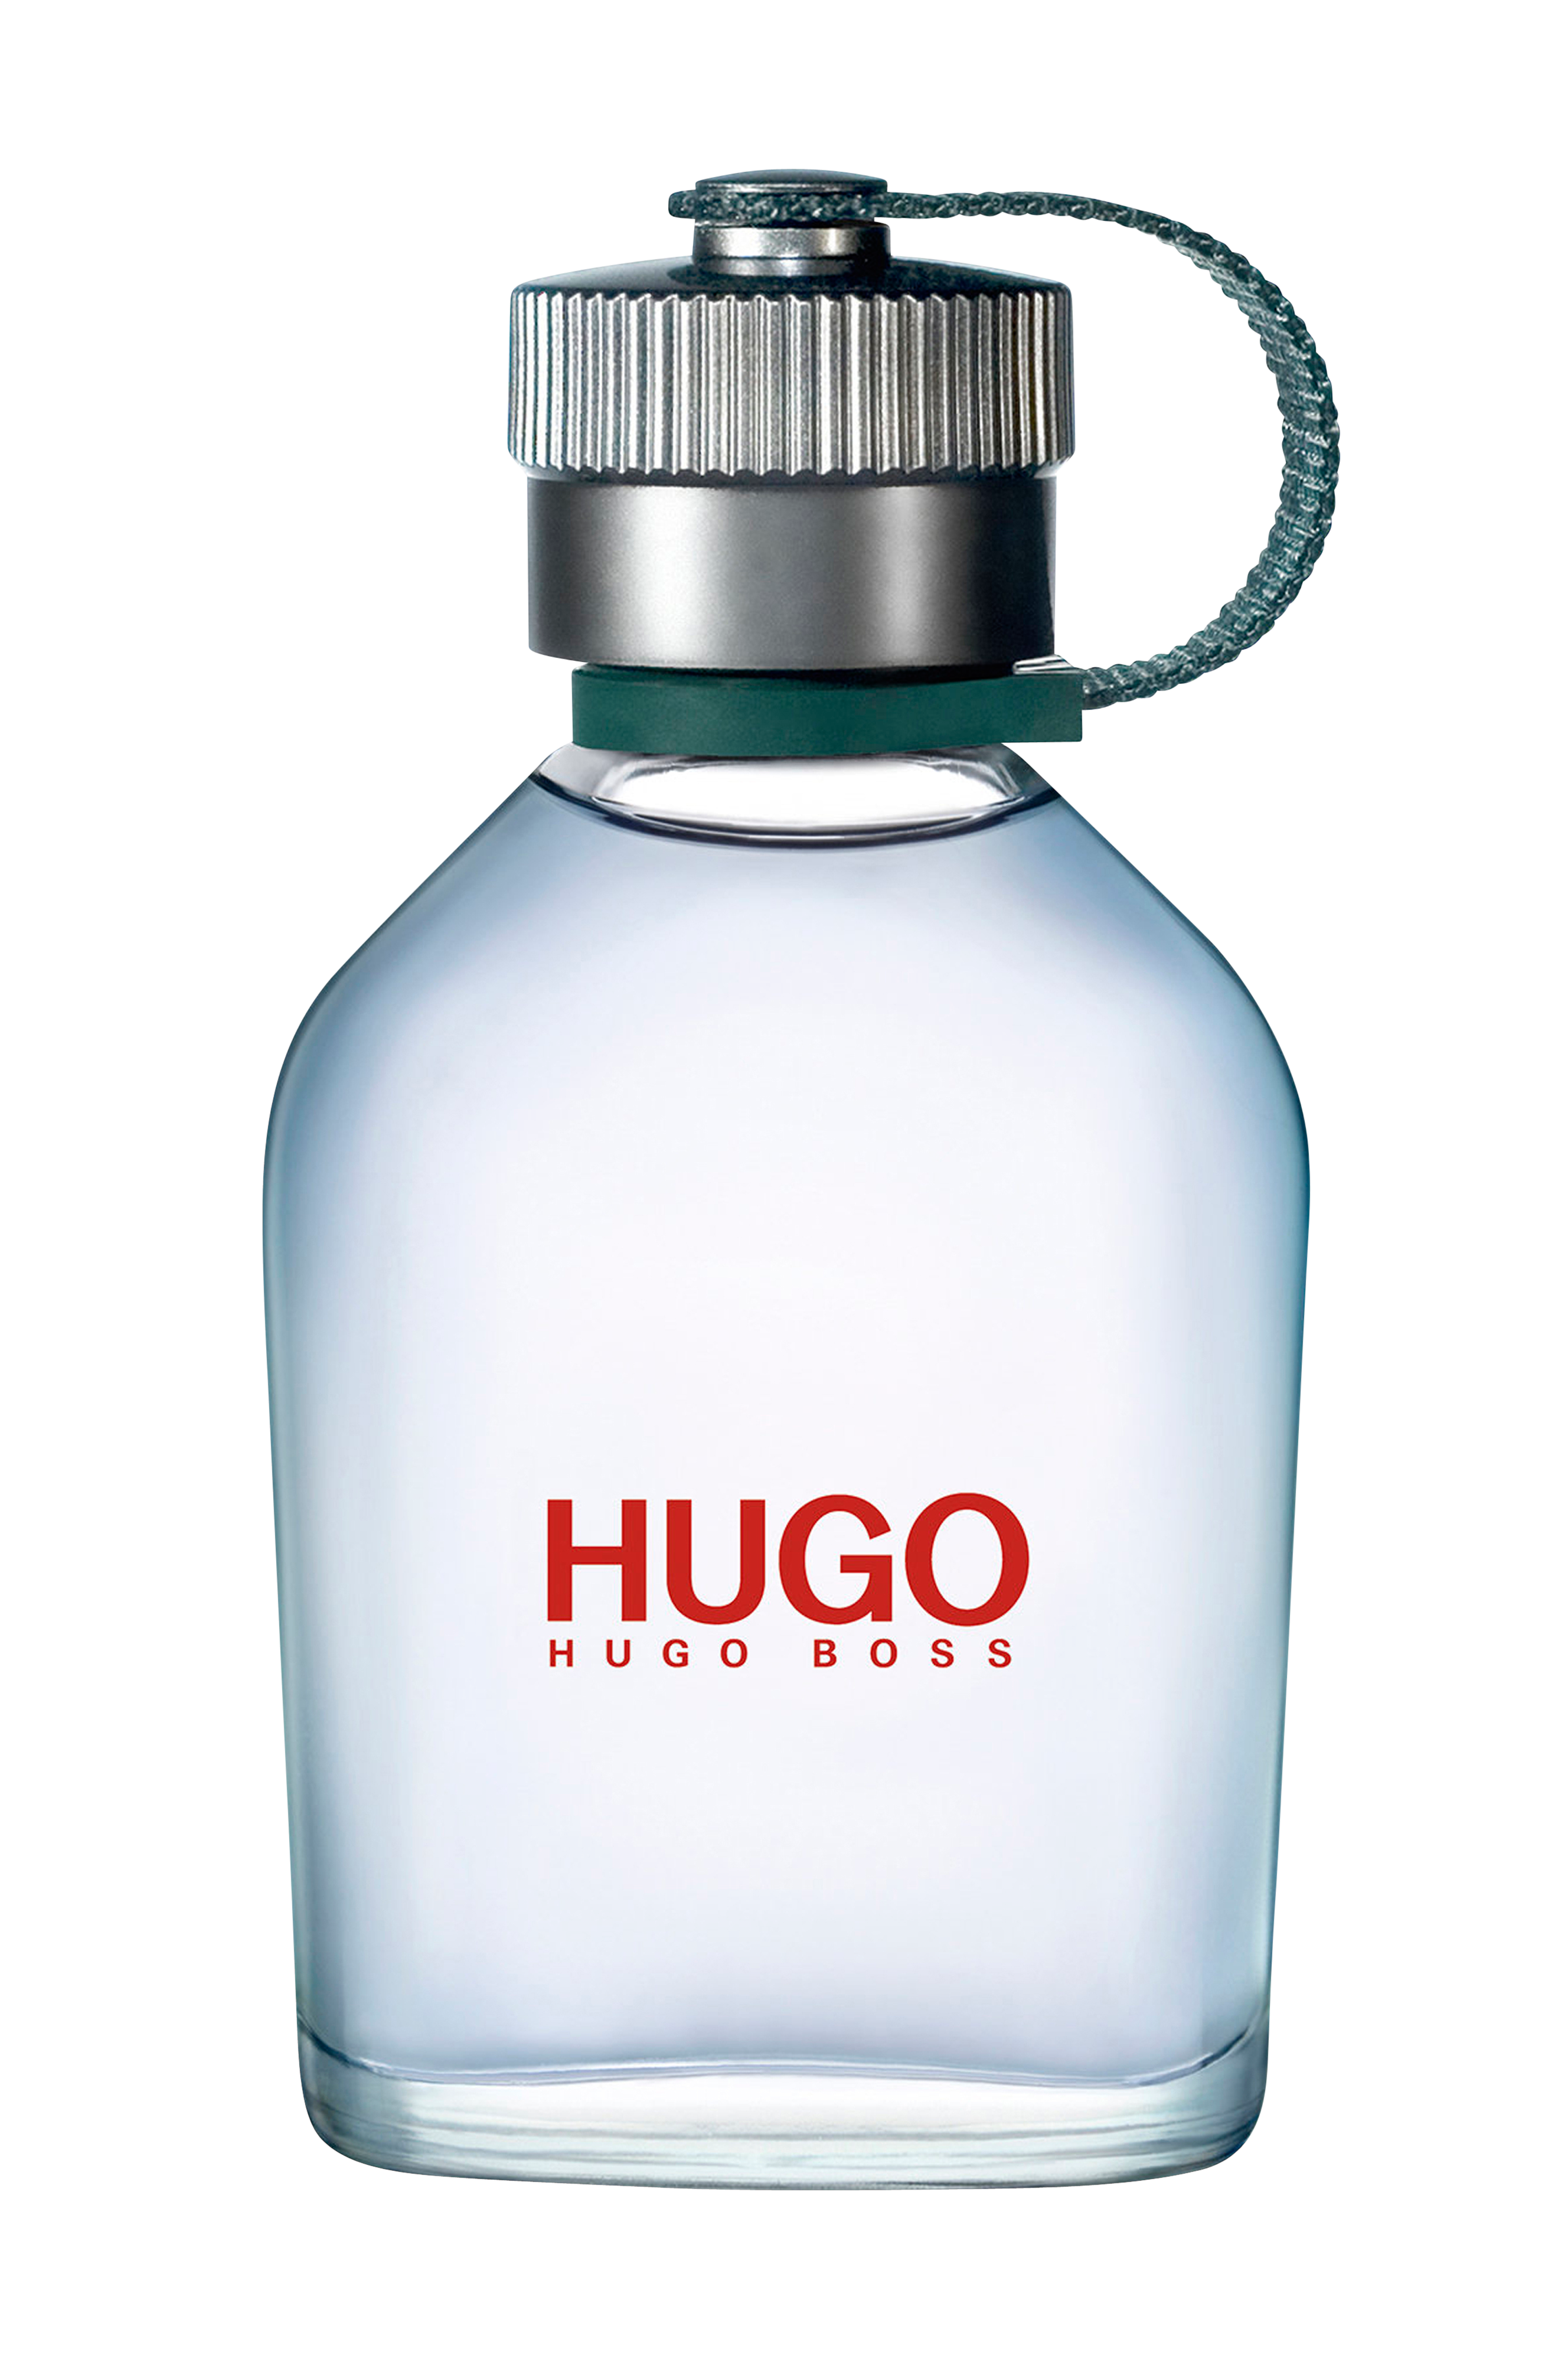 Хуго босс сайт. Hugo Boss Hugo men 100 мл. Тестер Boss Hugo Boss Eau de Toilette 100 ml. Boss Hugo Boss man туалетная вода 100 мл. Туалетная вода Hugo Boss Hugo man, 150 мл.